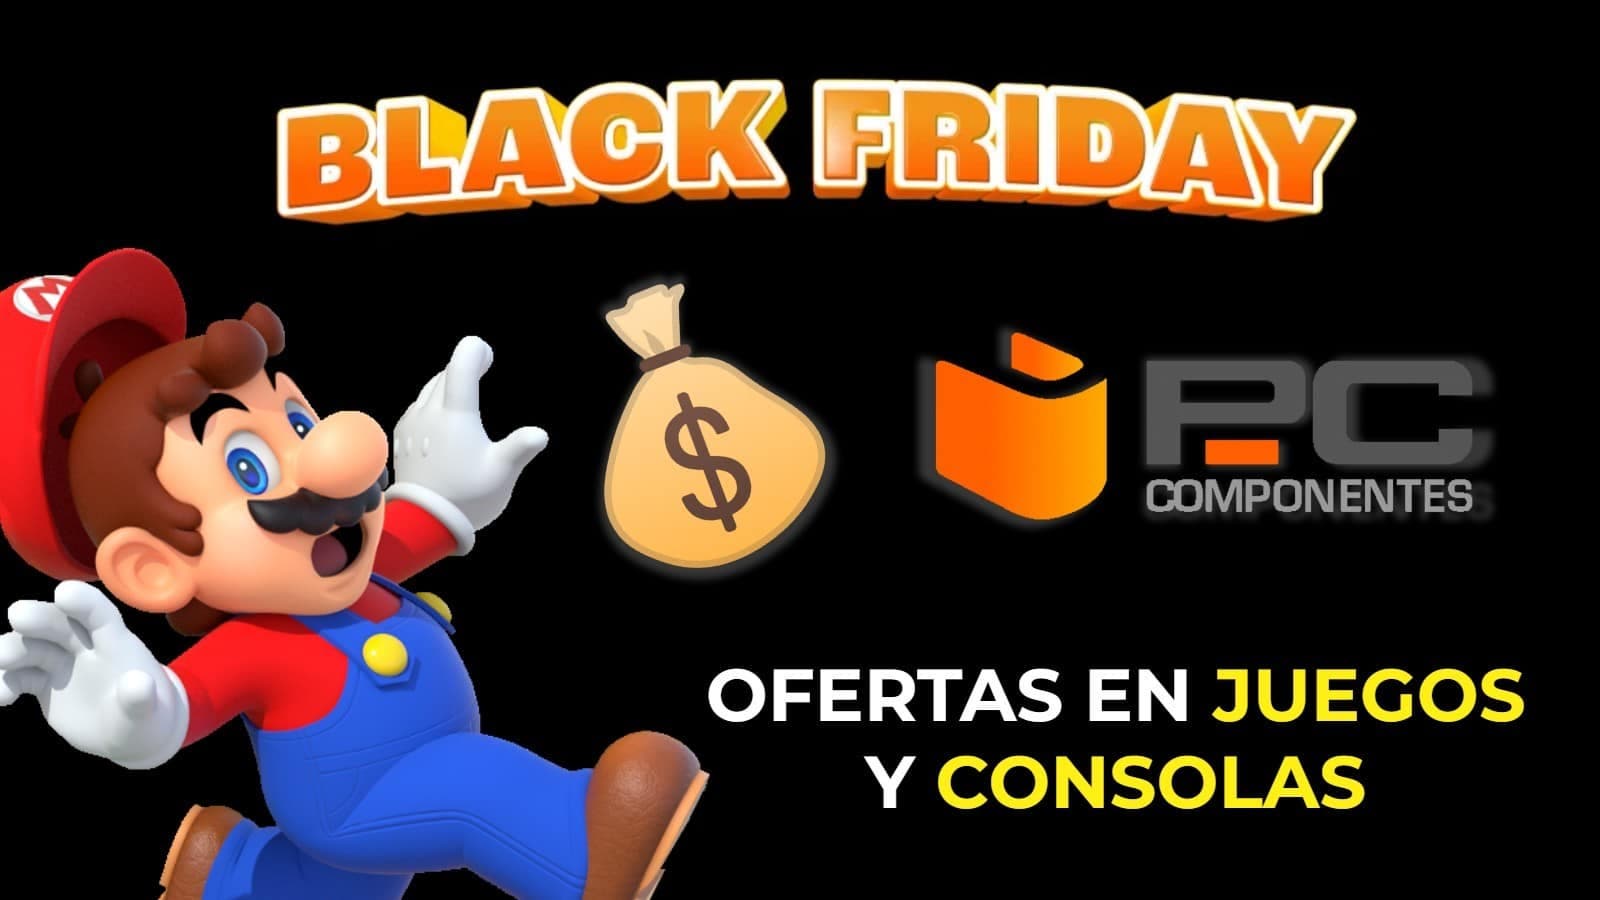 ESPECIAL BLACK FRIDAY! CHILE REBAJAS Nintendo Switch 💸 Ofertas Nintendo  Switch Eshop 